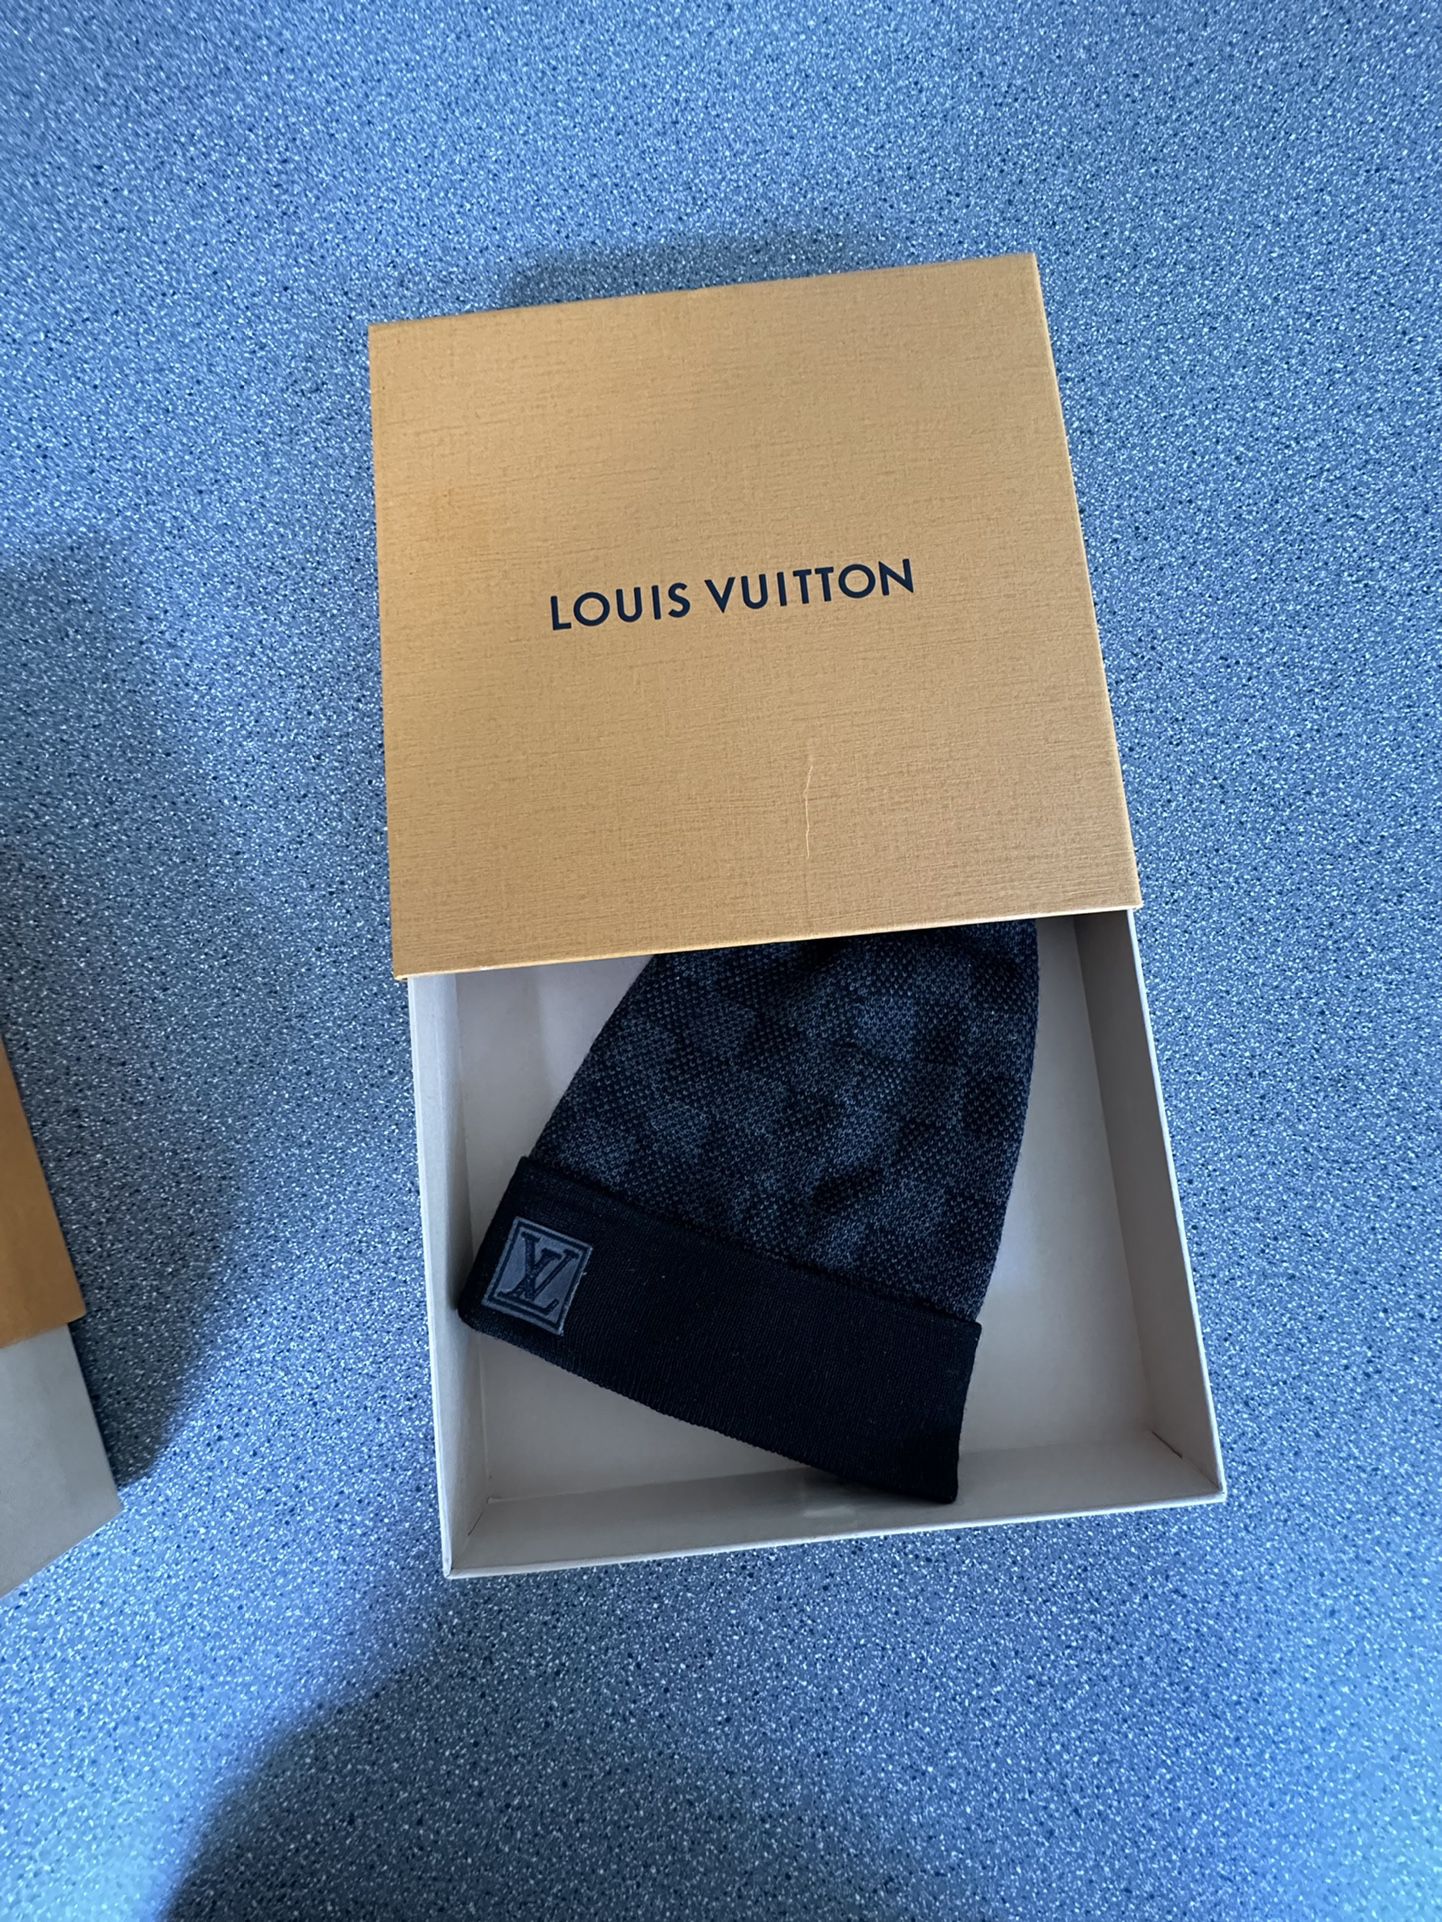 Louis Vuitton Damier Beanie for Sale in White Oak, MD - OfferUp